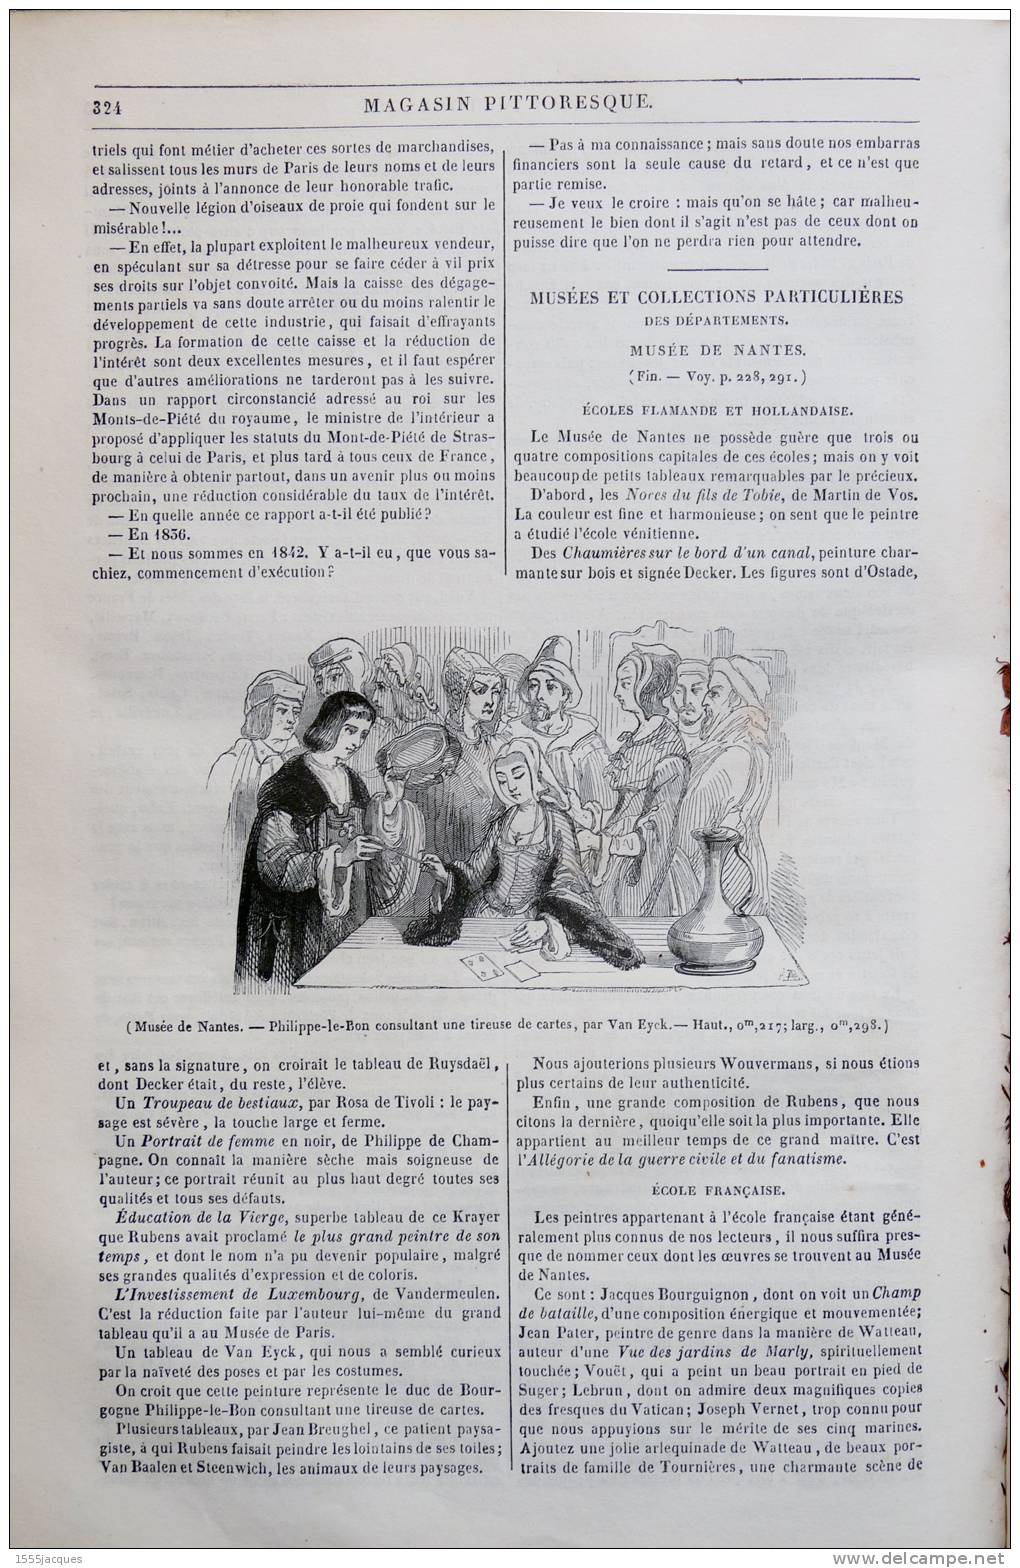 LE MAGASIN PITTORESQUE - OCT. 1842 - N°41 SINGE ALBINOS MUSEUM - MUSEE DE NANTES - WAPERS VAN EYCK - - 1800 - 1849